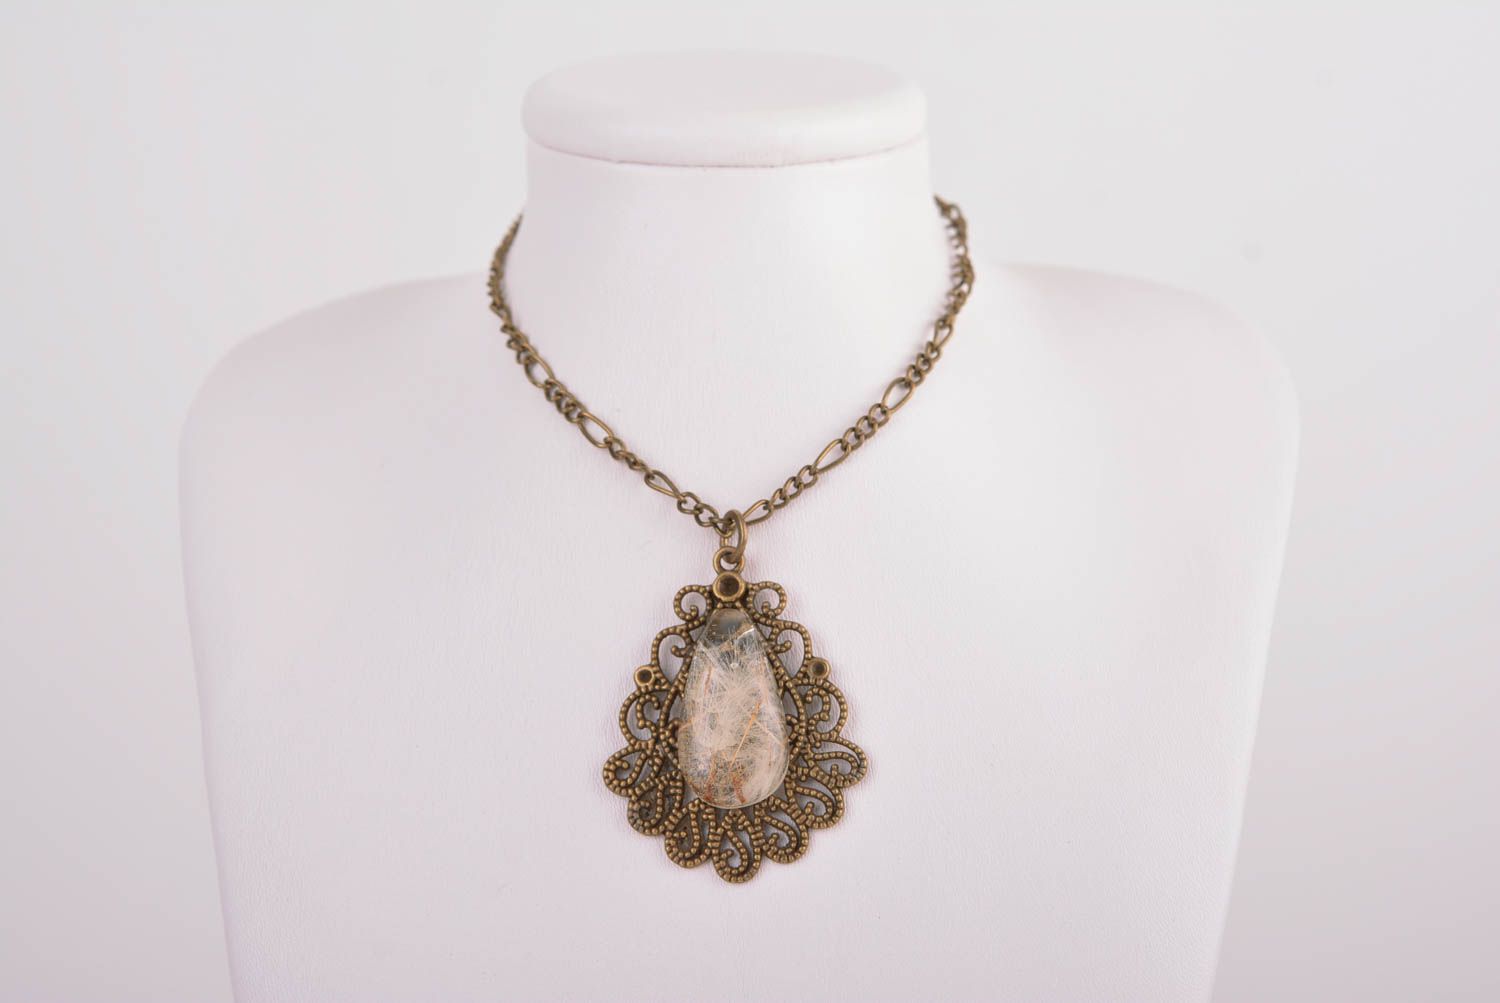 Gentle handmade epoxy pendant with real flowers costume jewelry designs photo 3